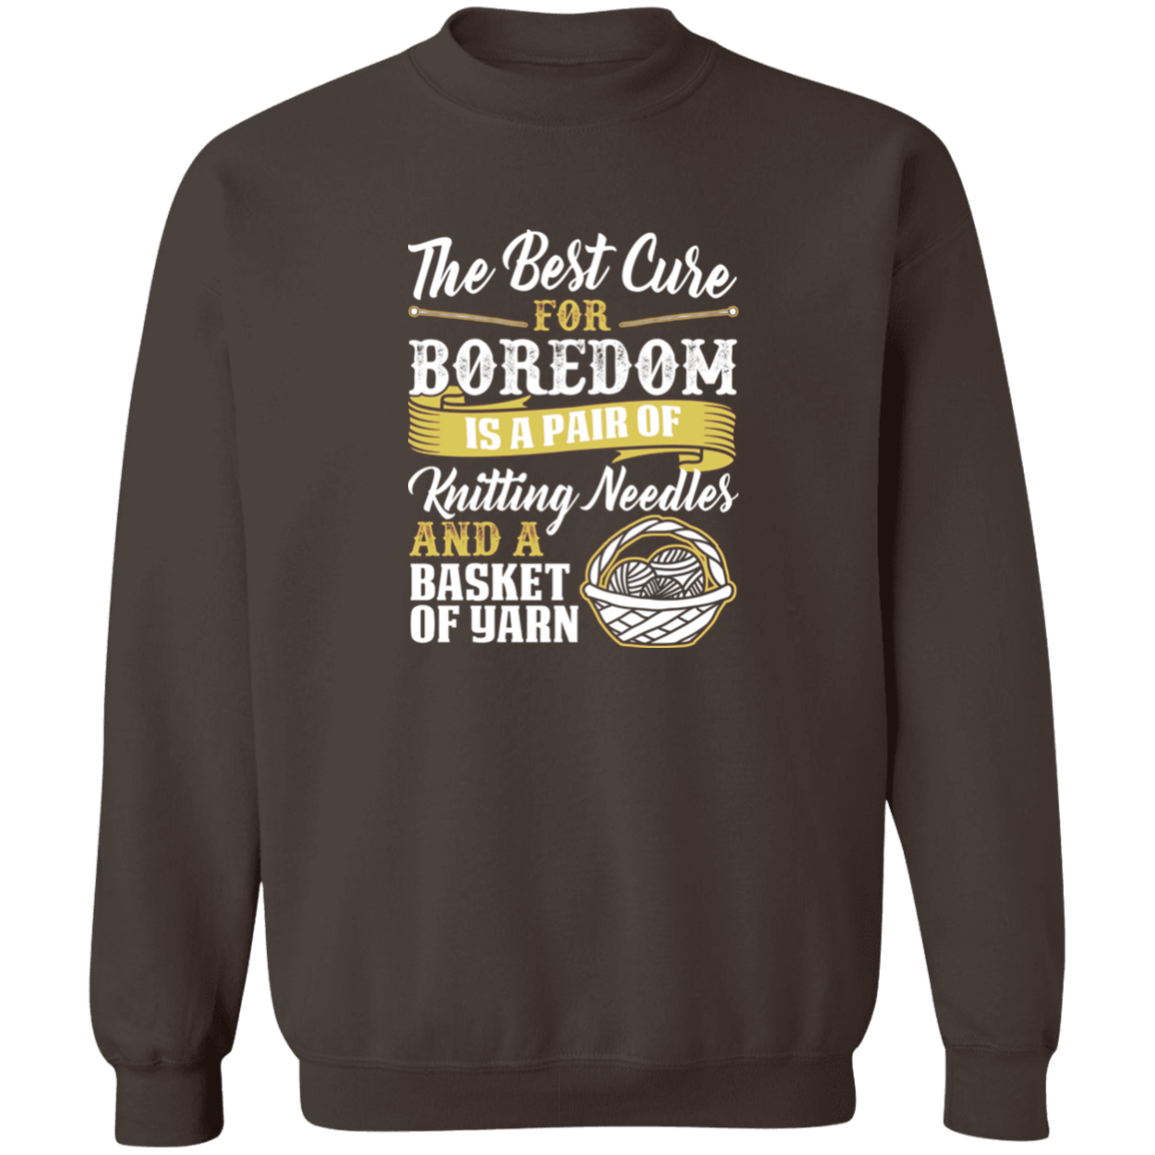 Cure For Boredom - Knitting - gold Sweatshirt